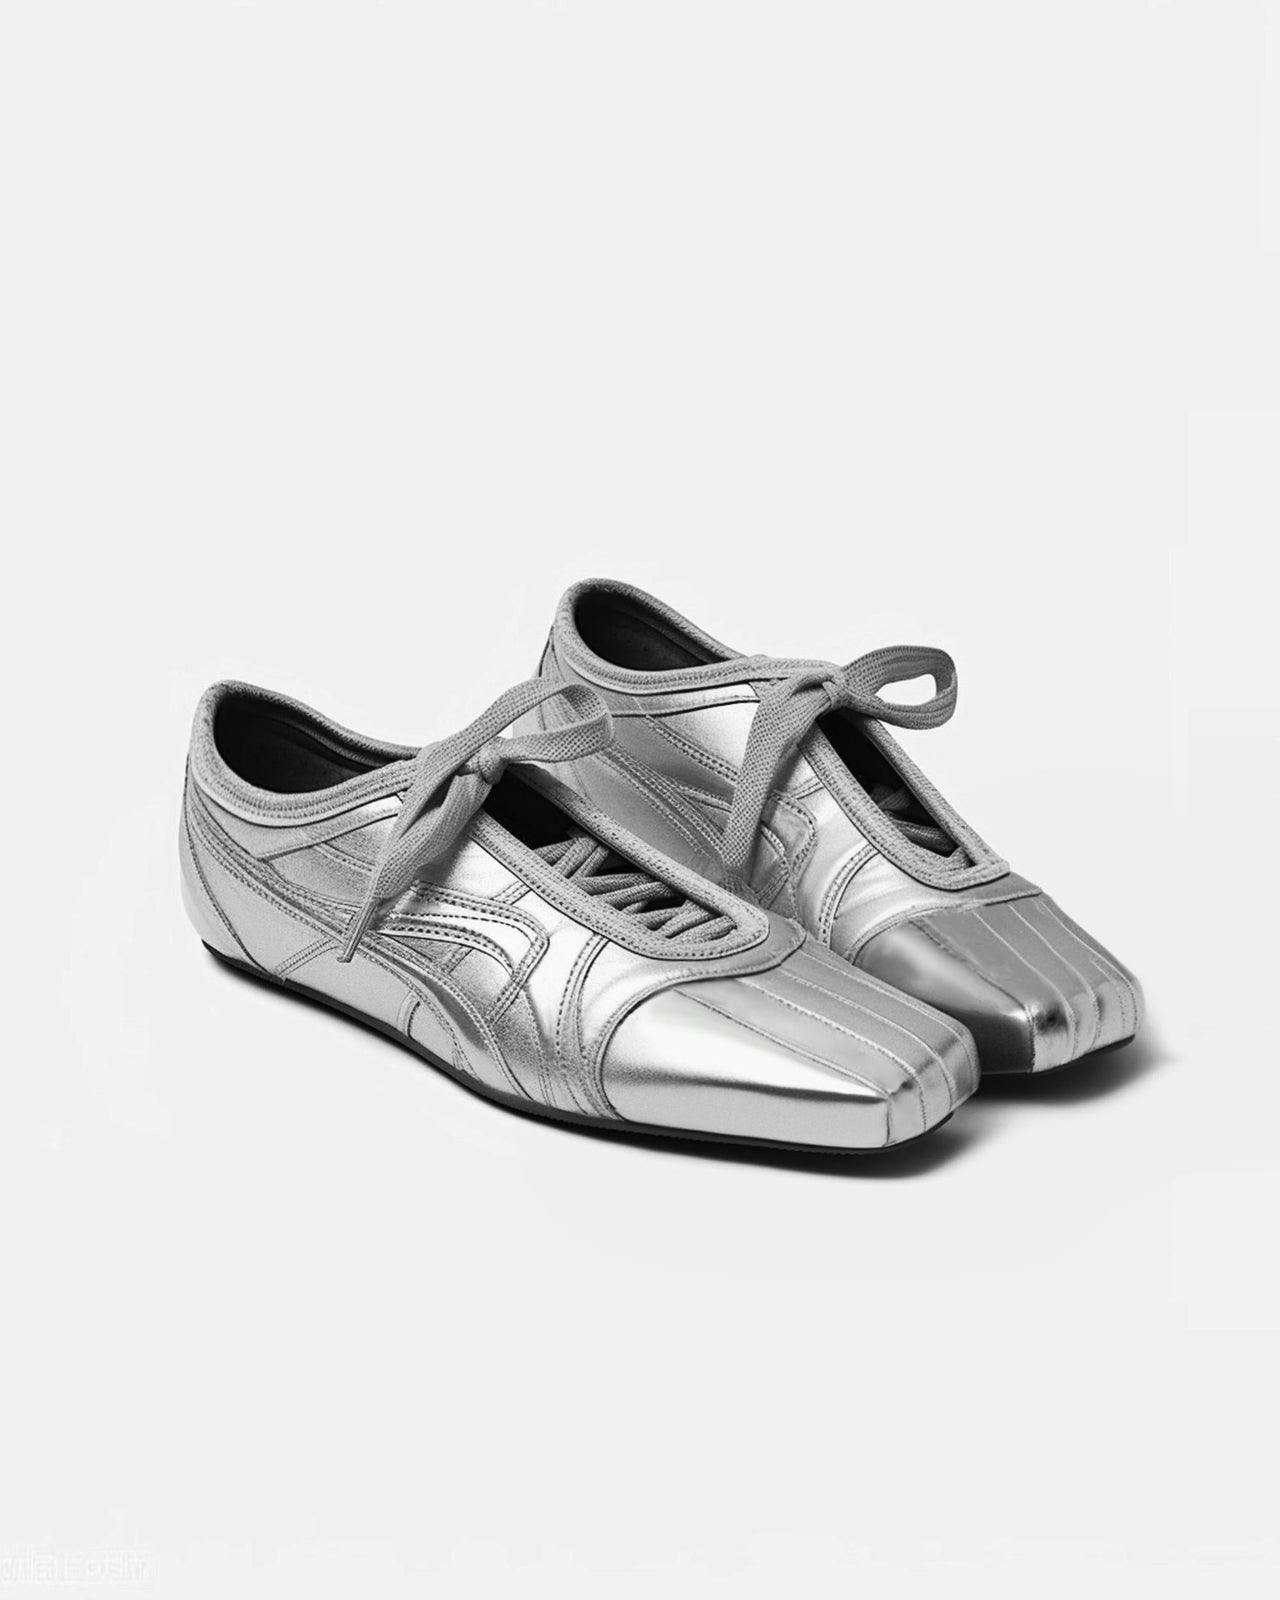 Metallic Square toe Low Top Sneakers - Silver